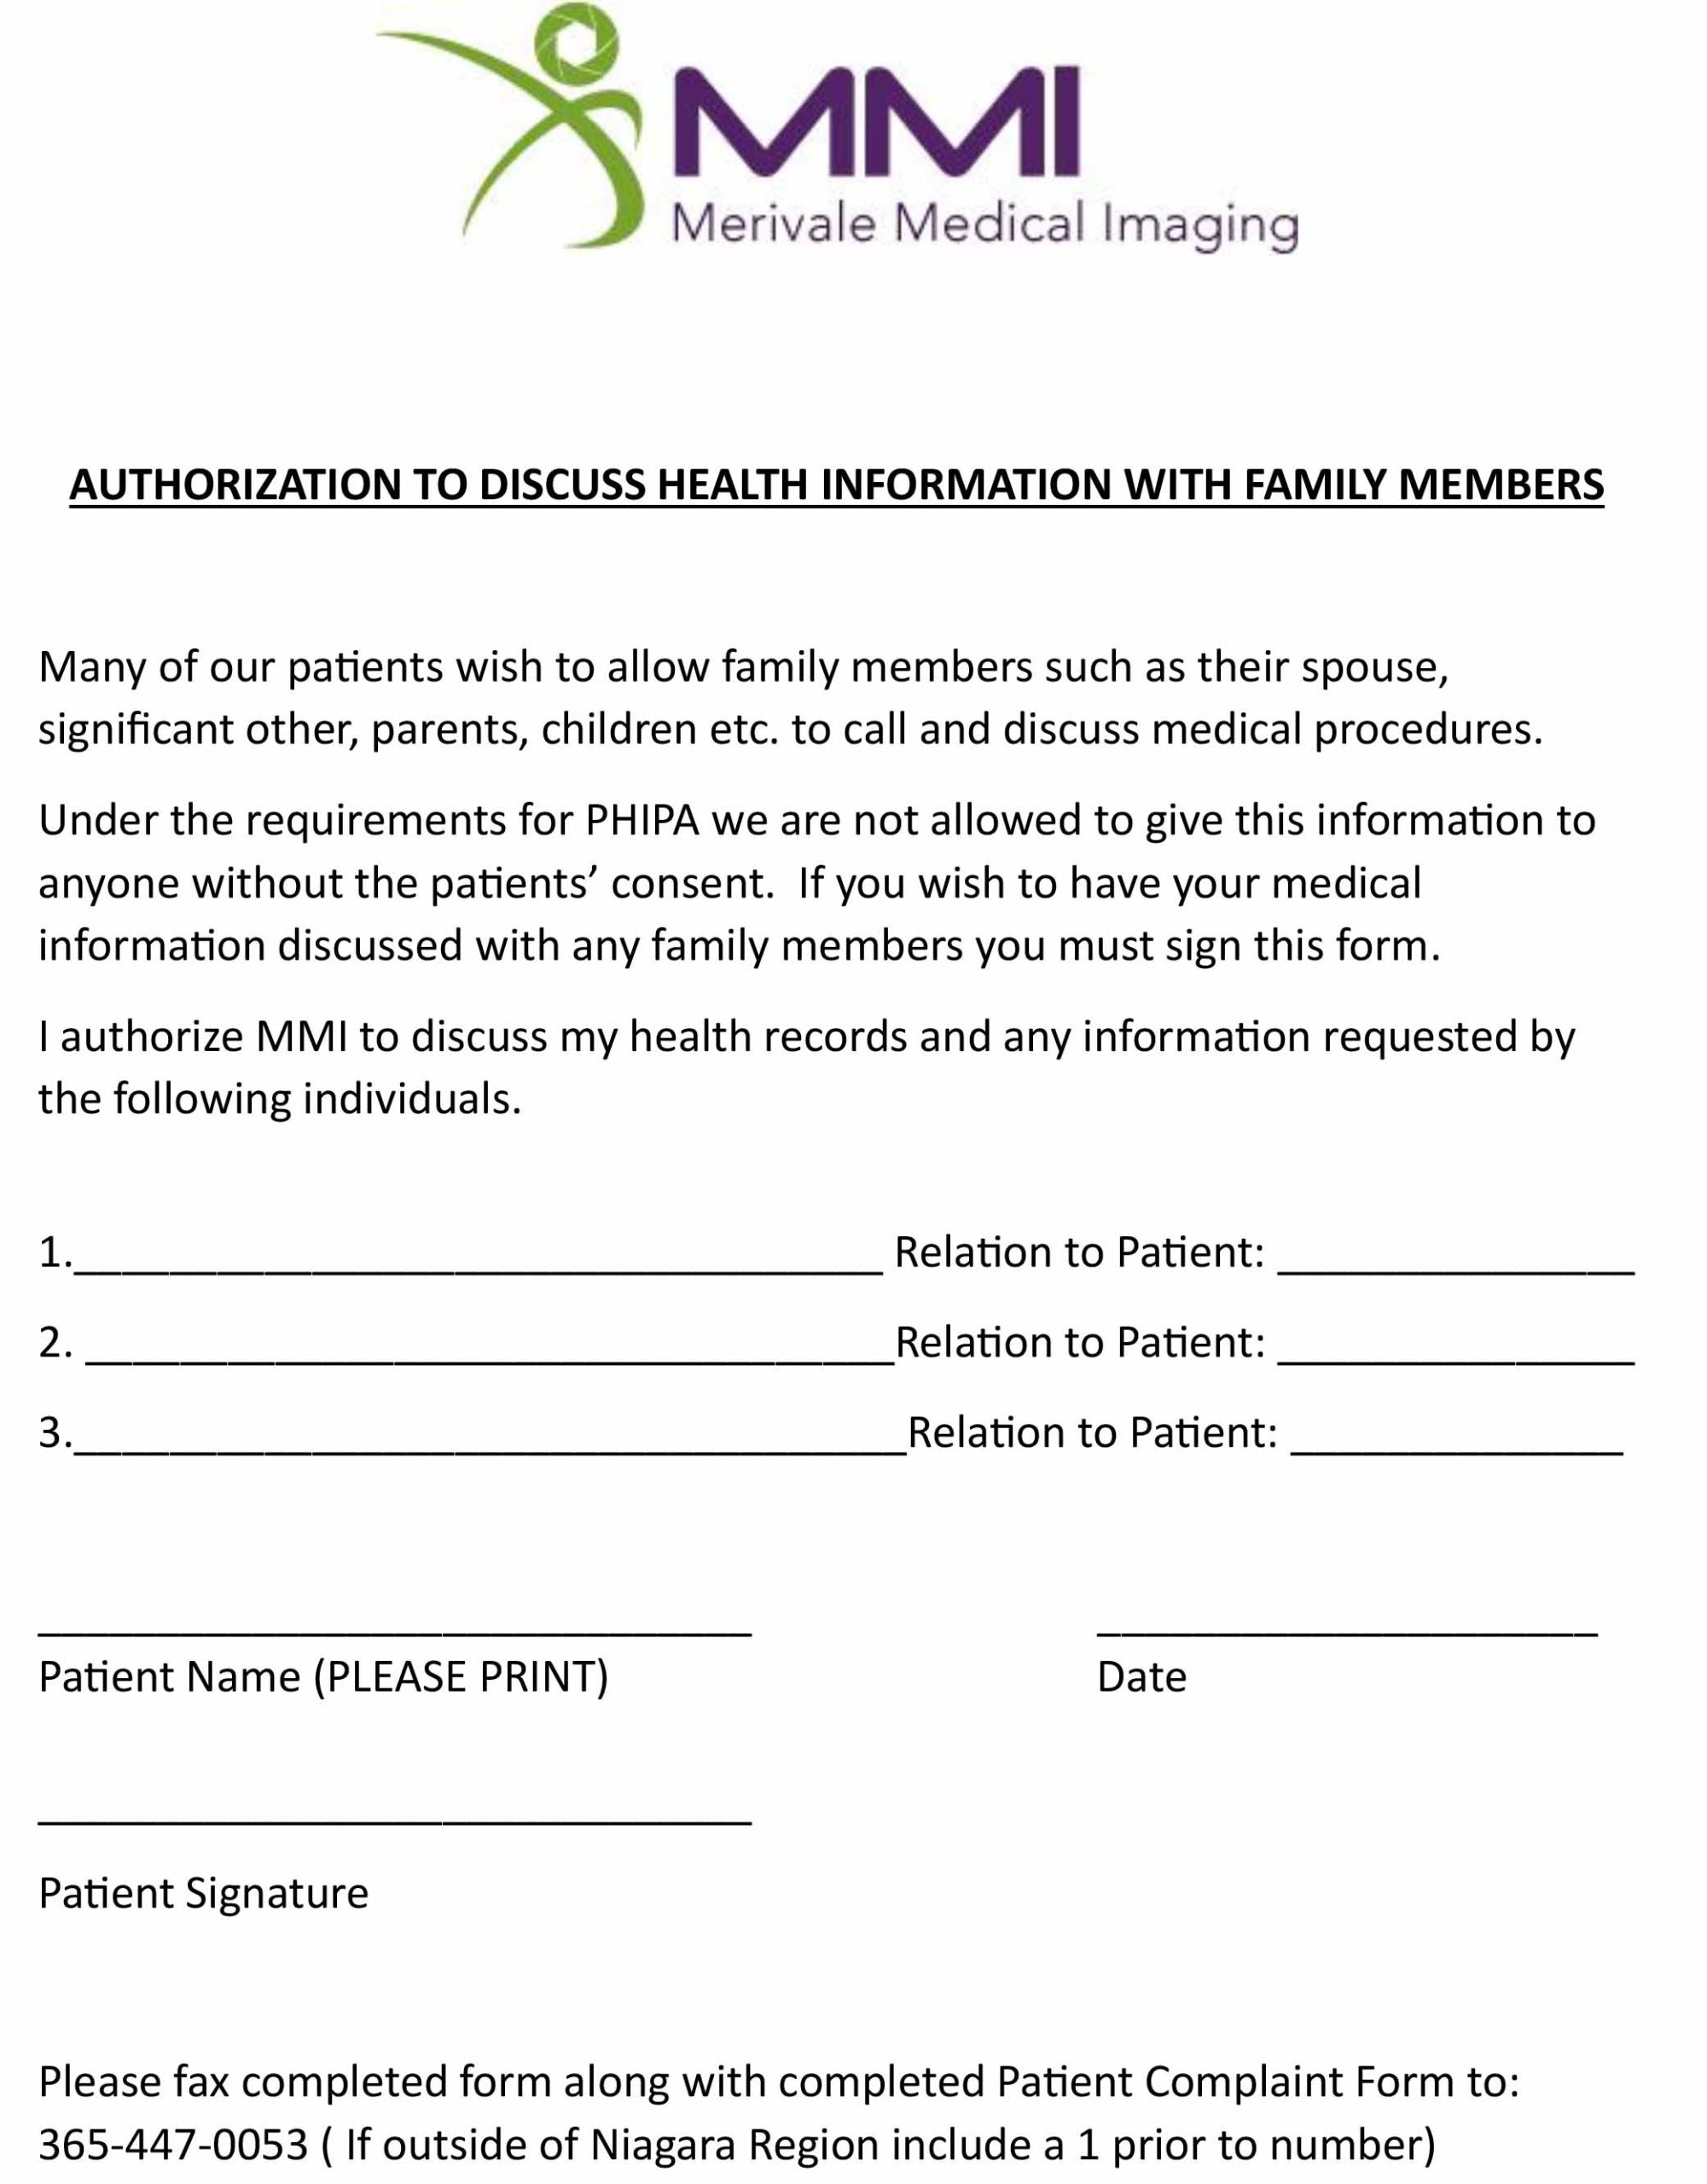 Health Information Authorization Form